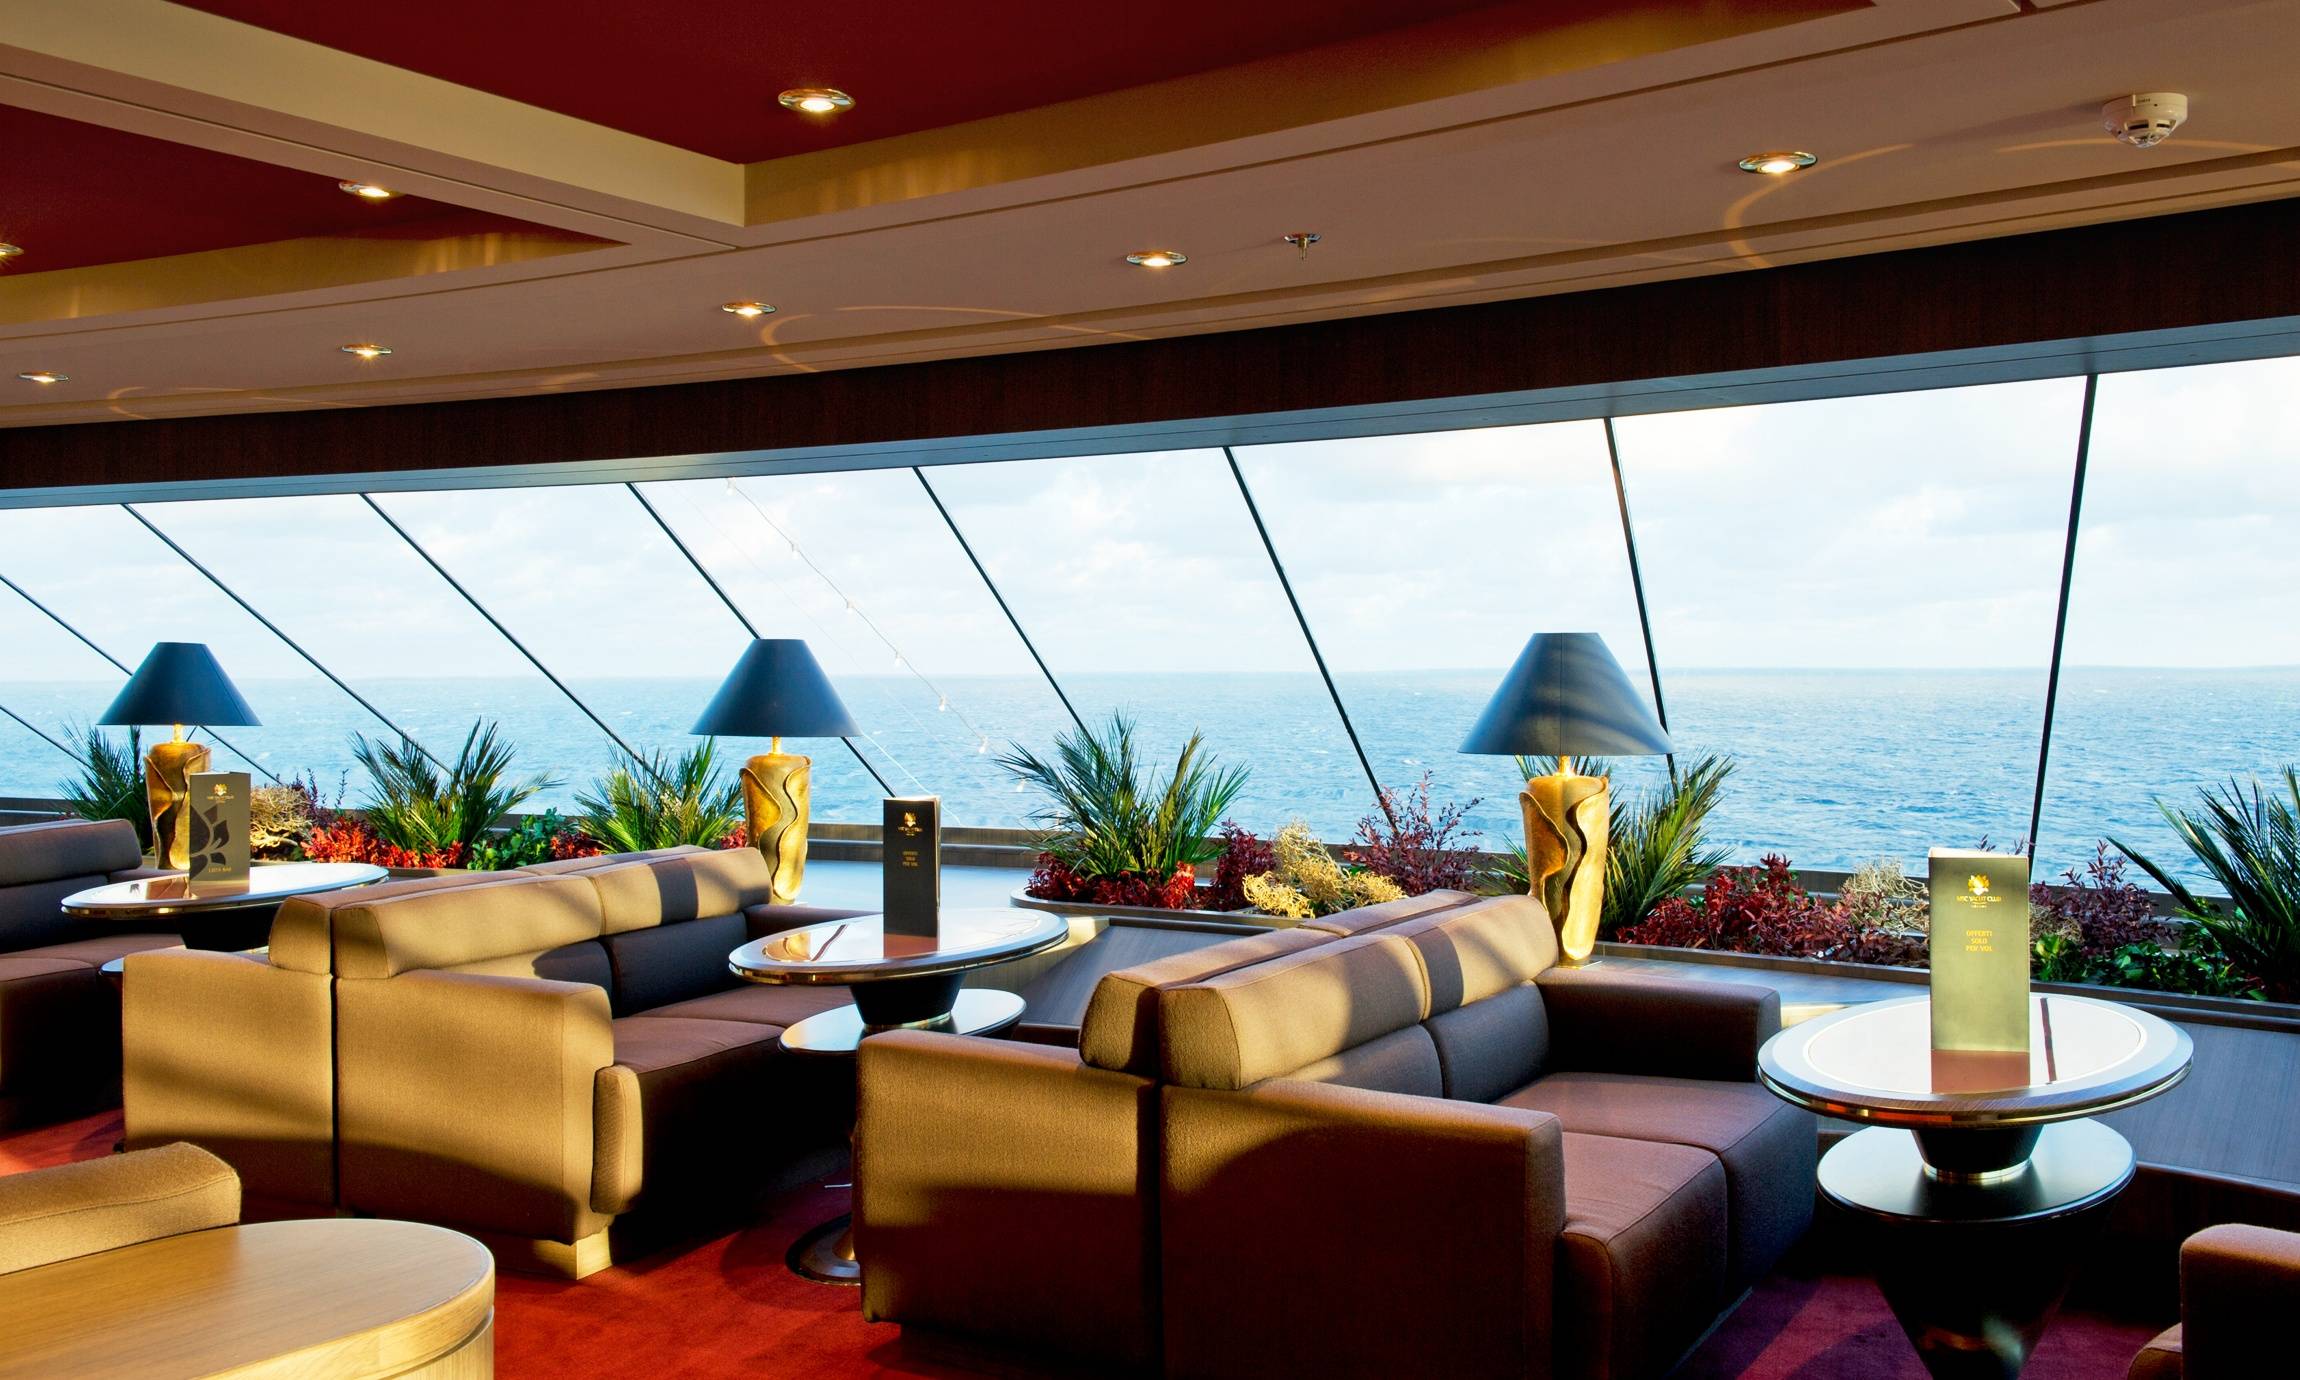 Top sail lounge